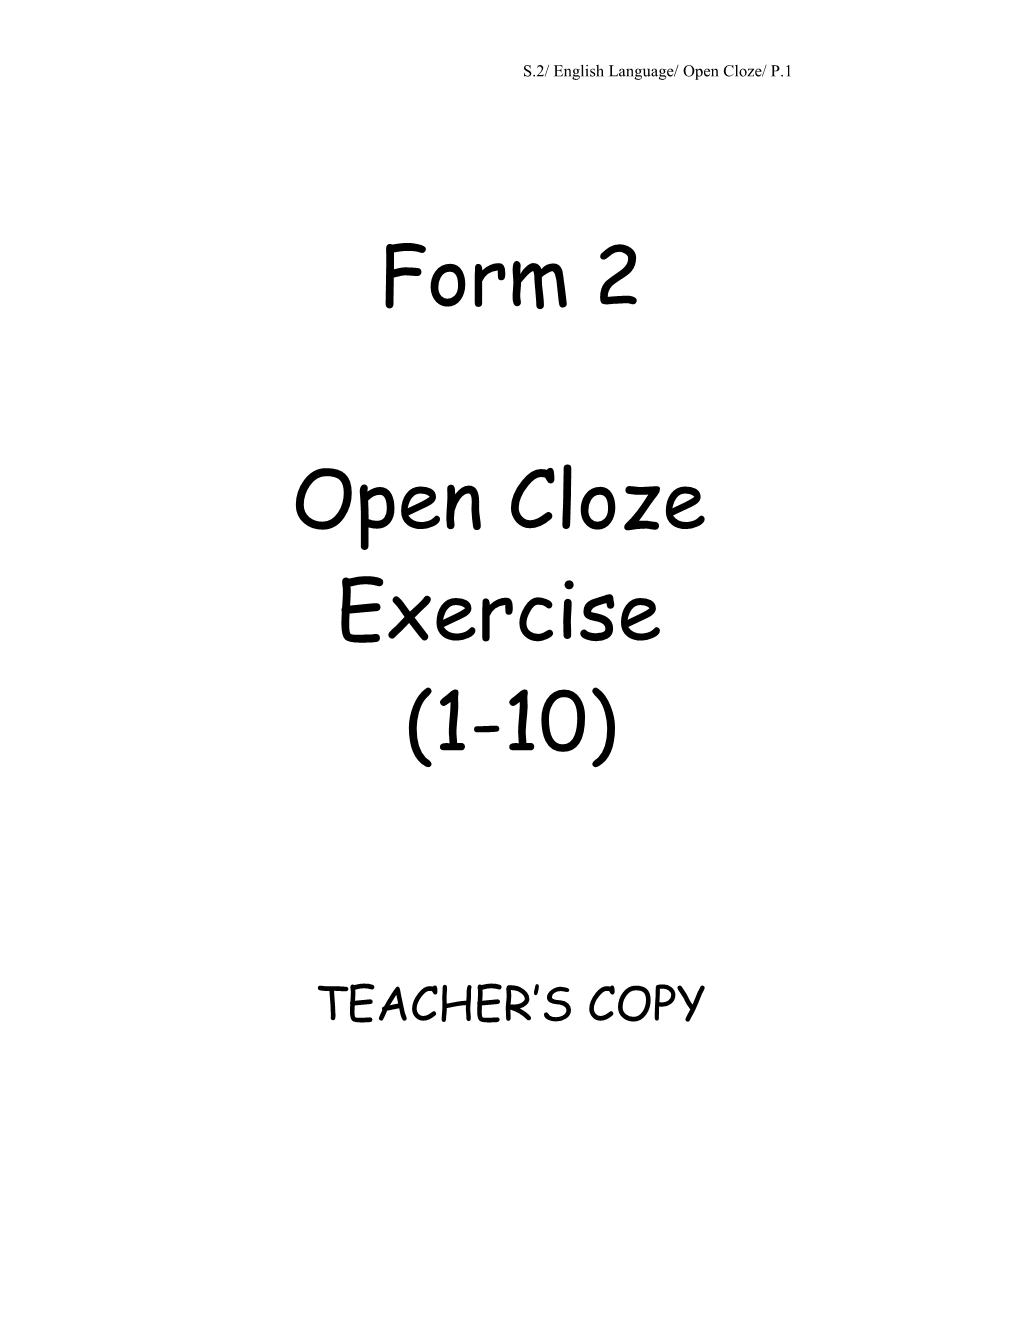 Form 2 Open Cloze